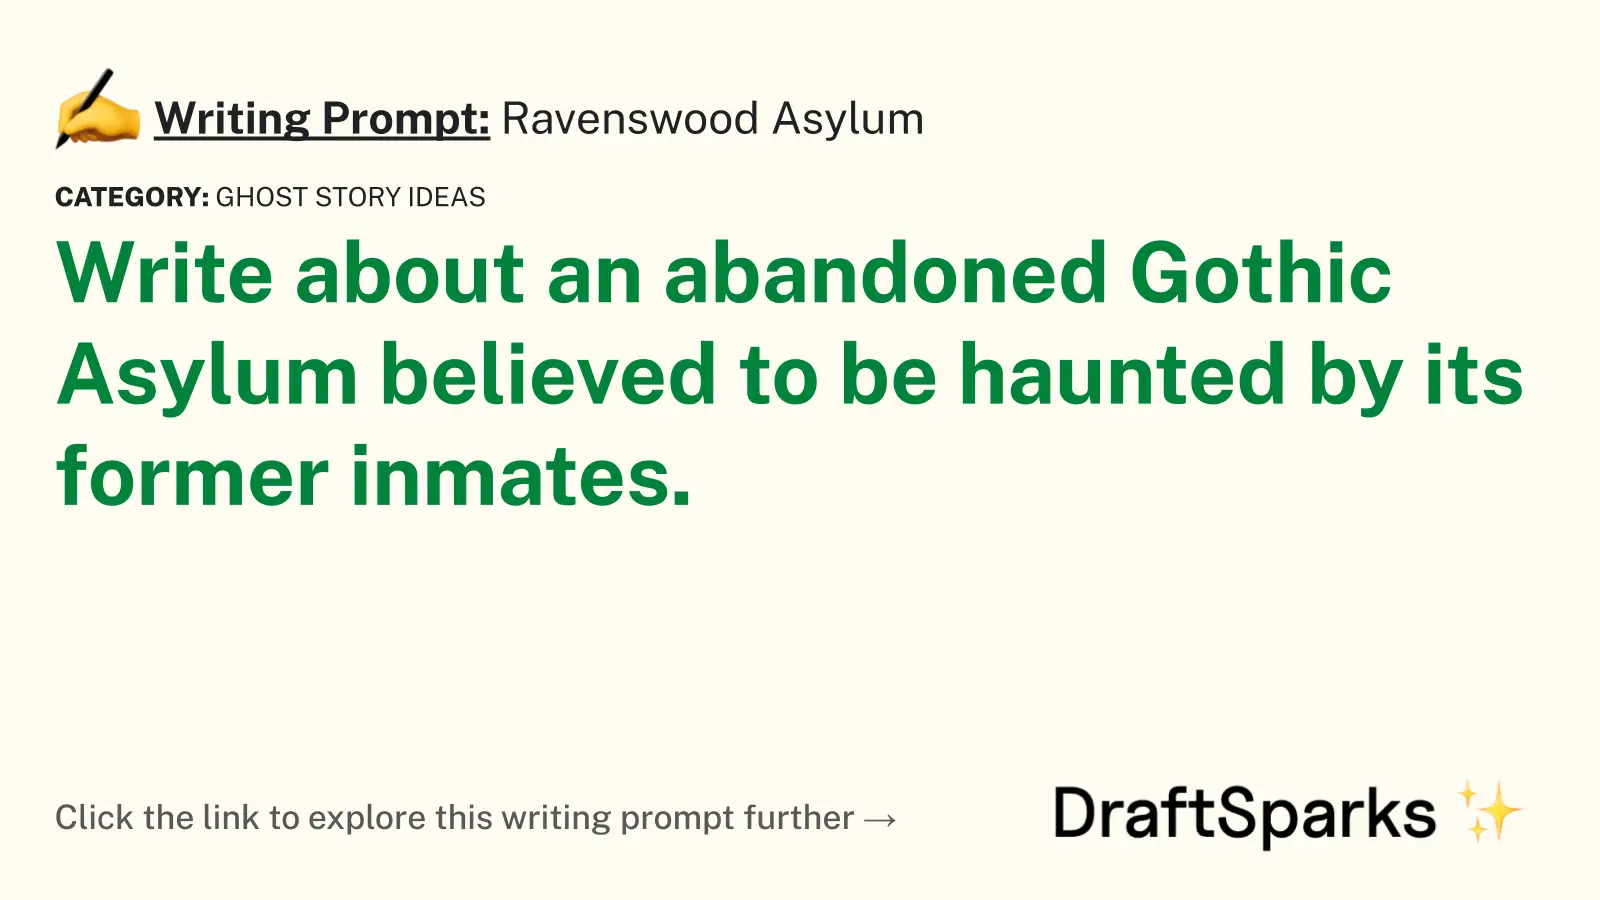 Ravenswood Asylum